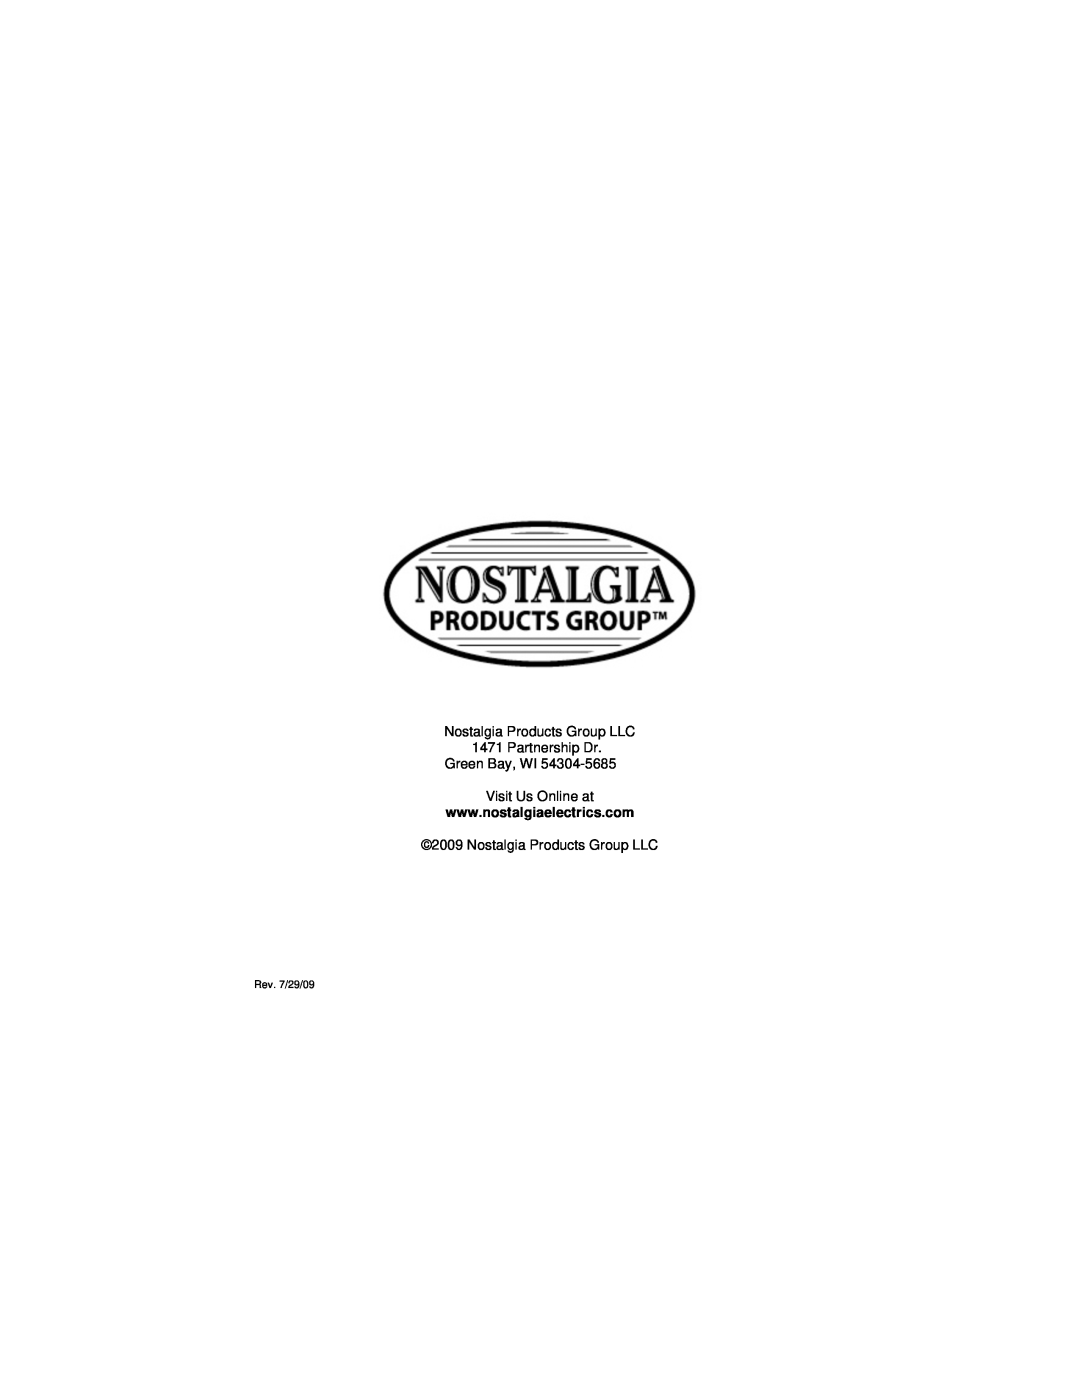 Nostalgia Electrics CCP-510 manual Nostalgia Products Group LLC 1471 Partnership Dr, Green Bay, WI Visit Us Online at 